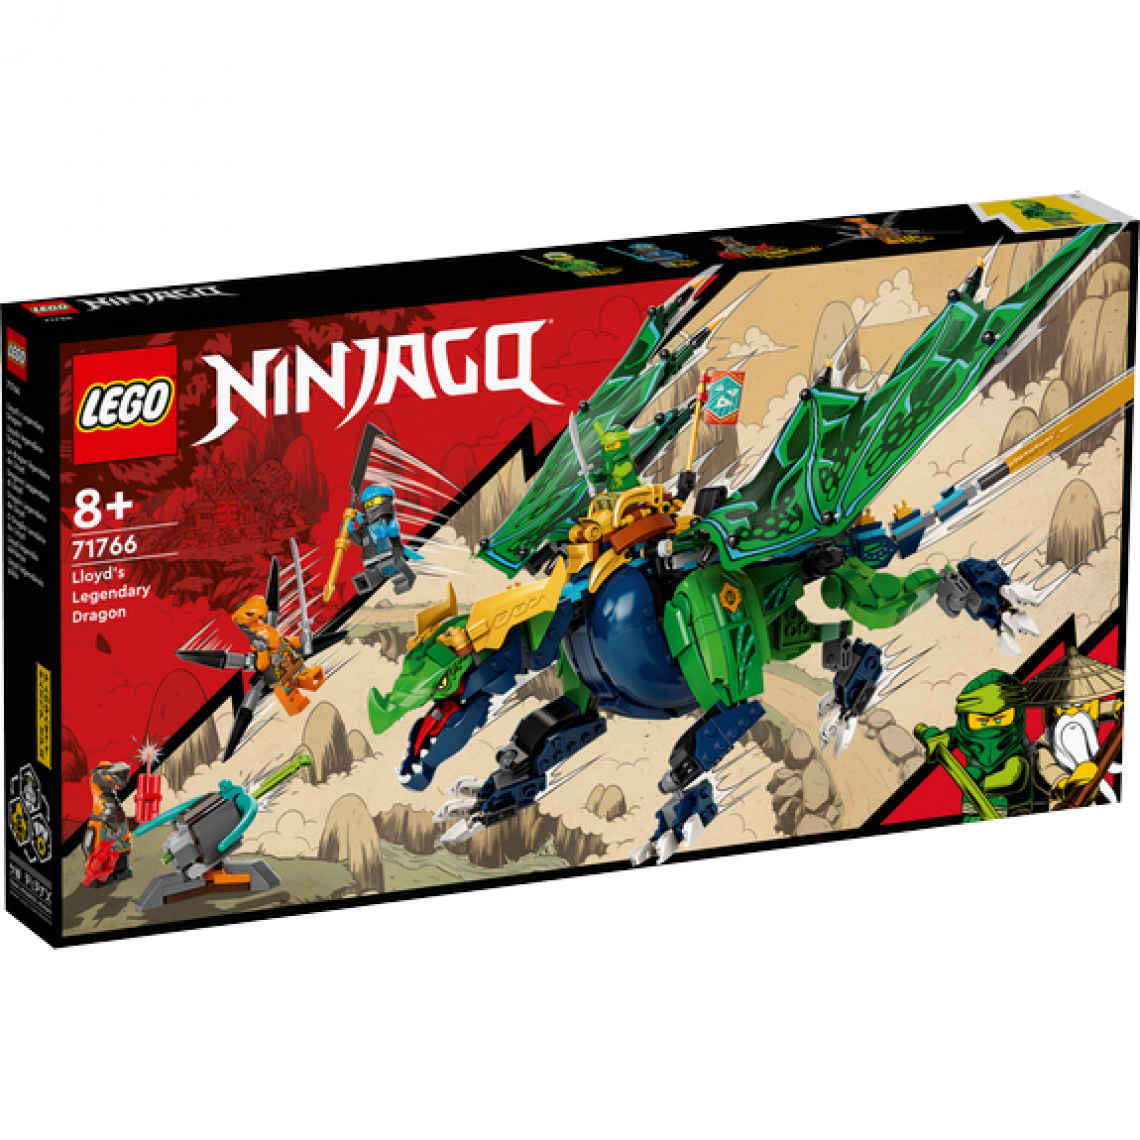 Ludendo - Le dragon légendaire de Lloyd LEGO Ninjago 71766 - Briques et blocs